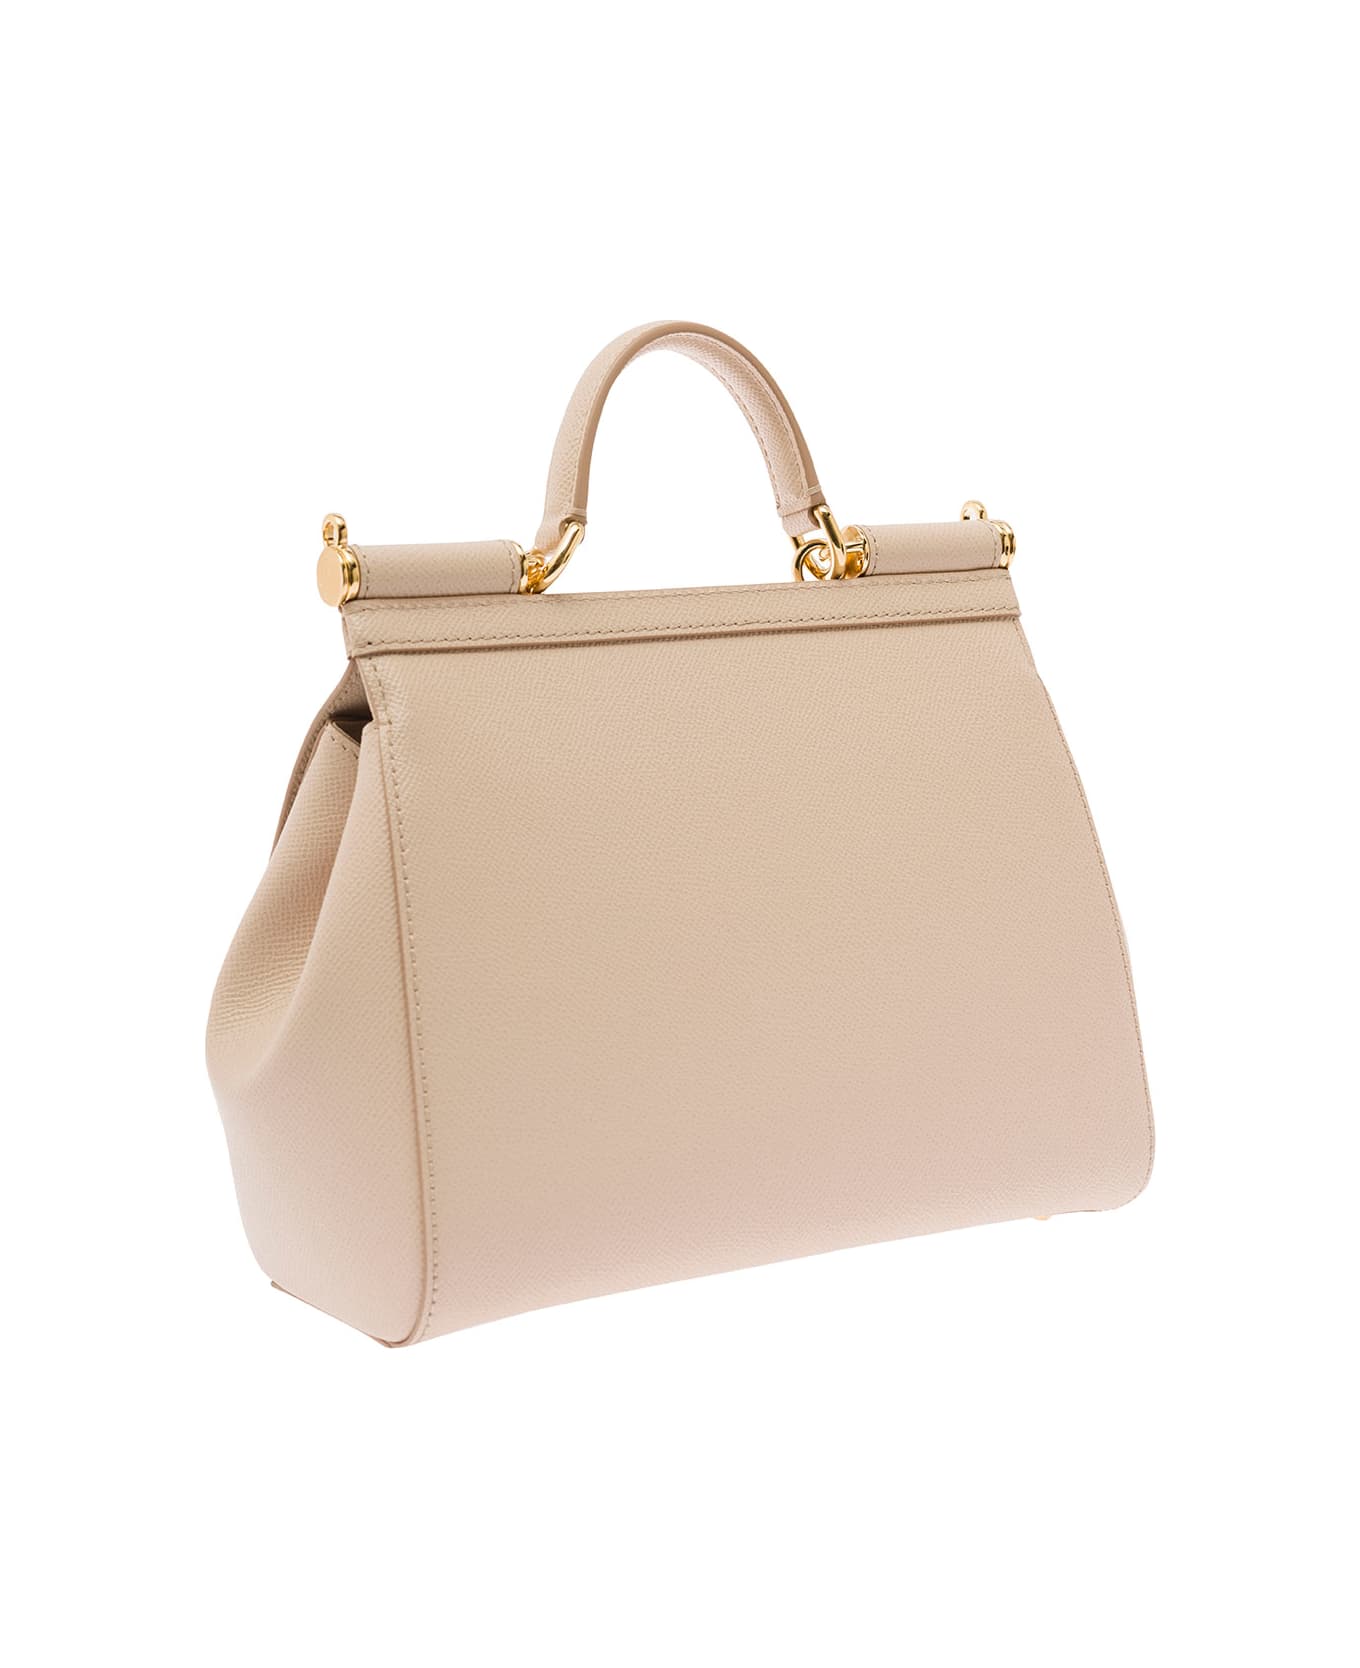 Dolce & Gabbana 'sicily Medium' Beige Handbag In Grained Leather Woman - Beige